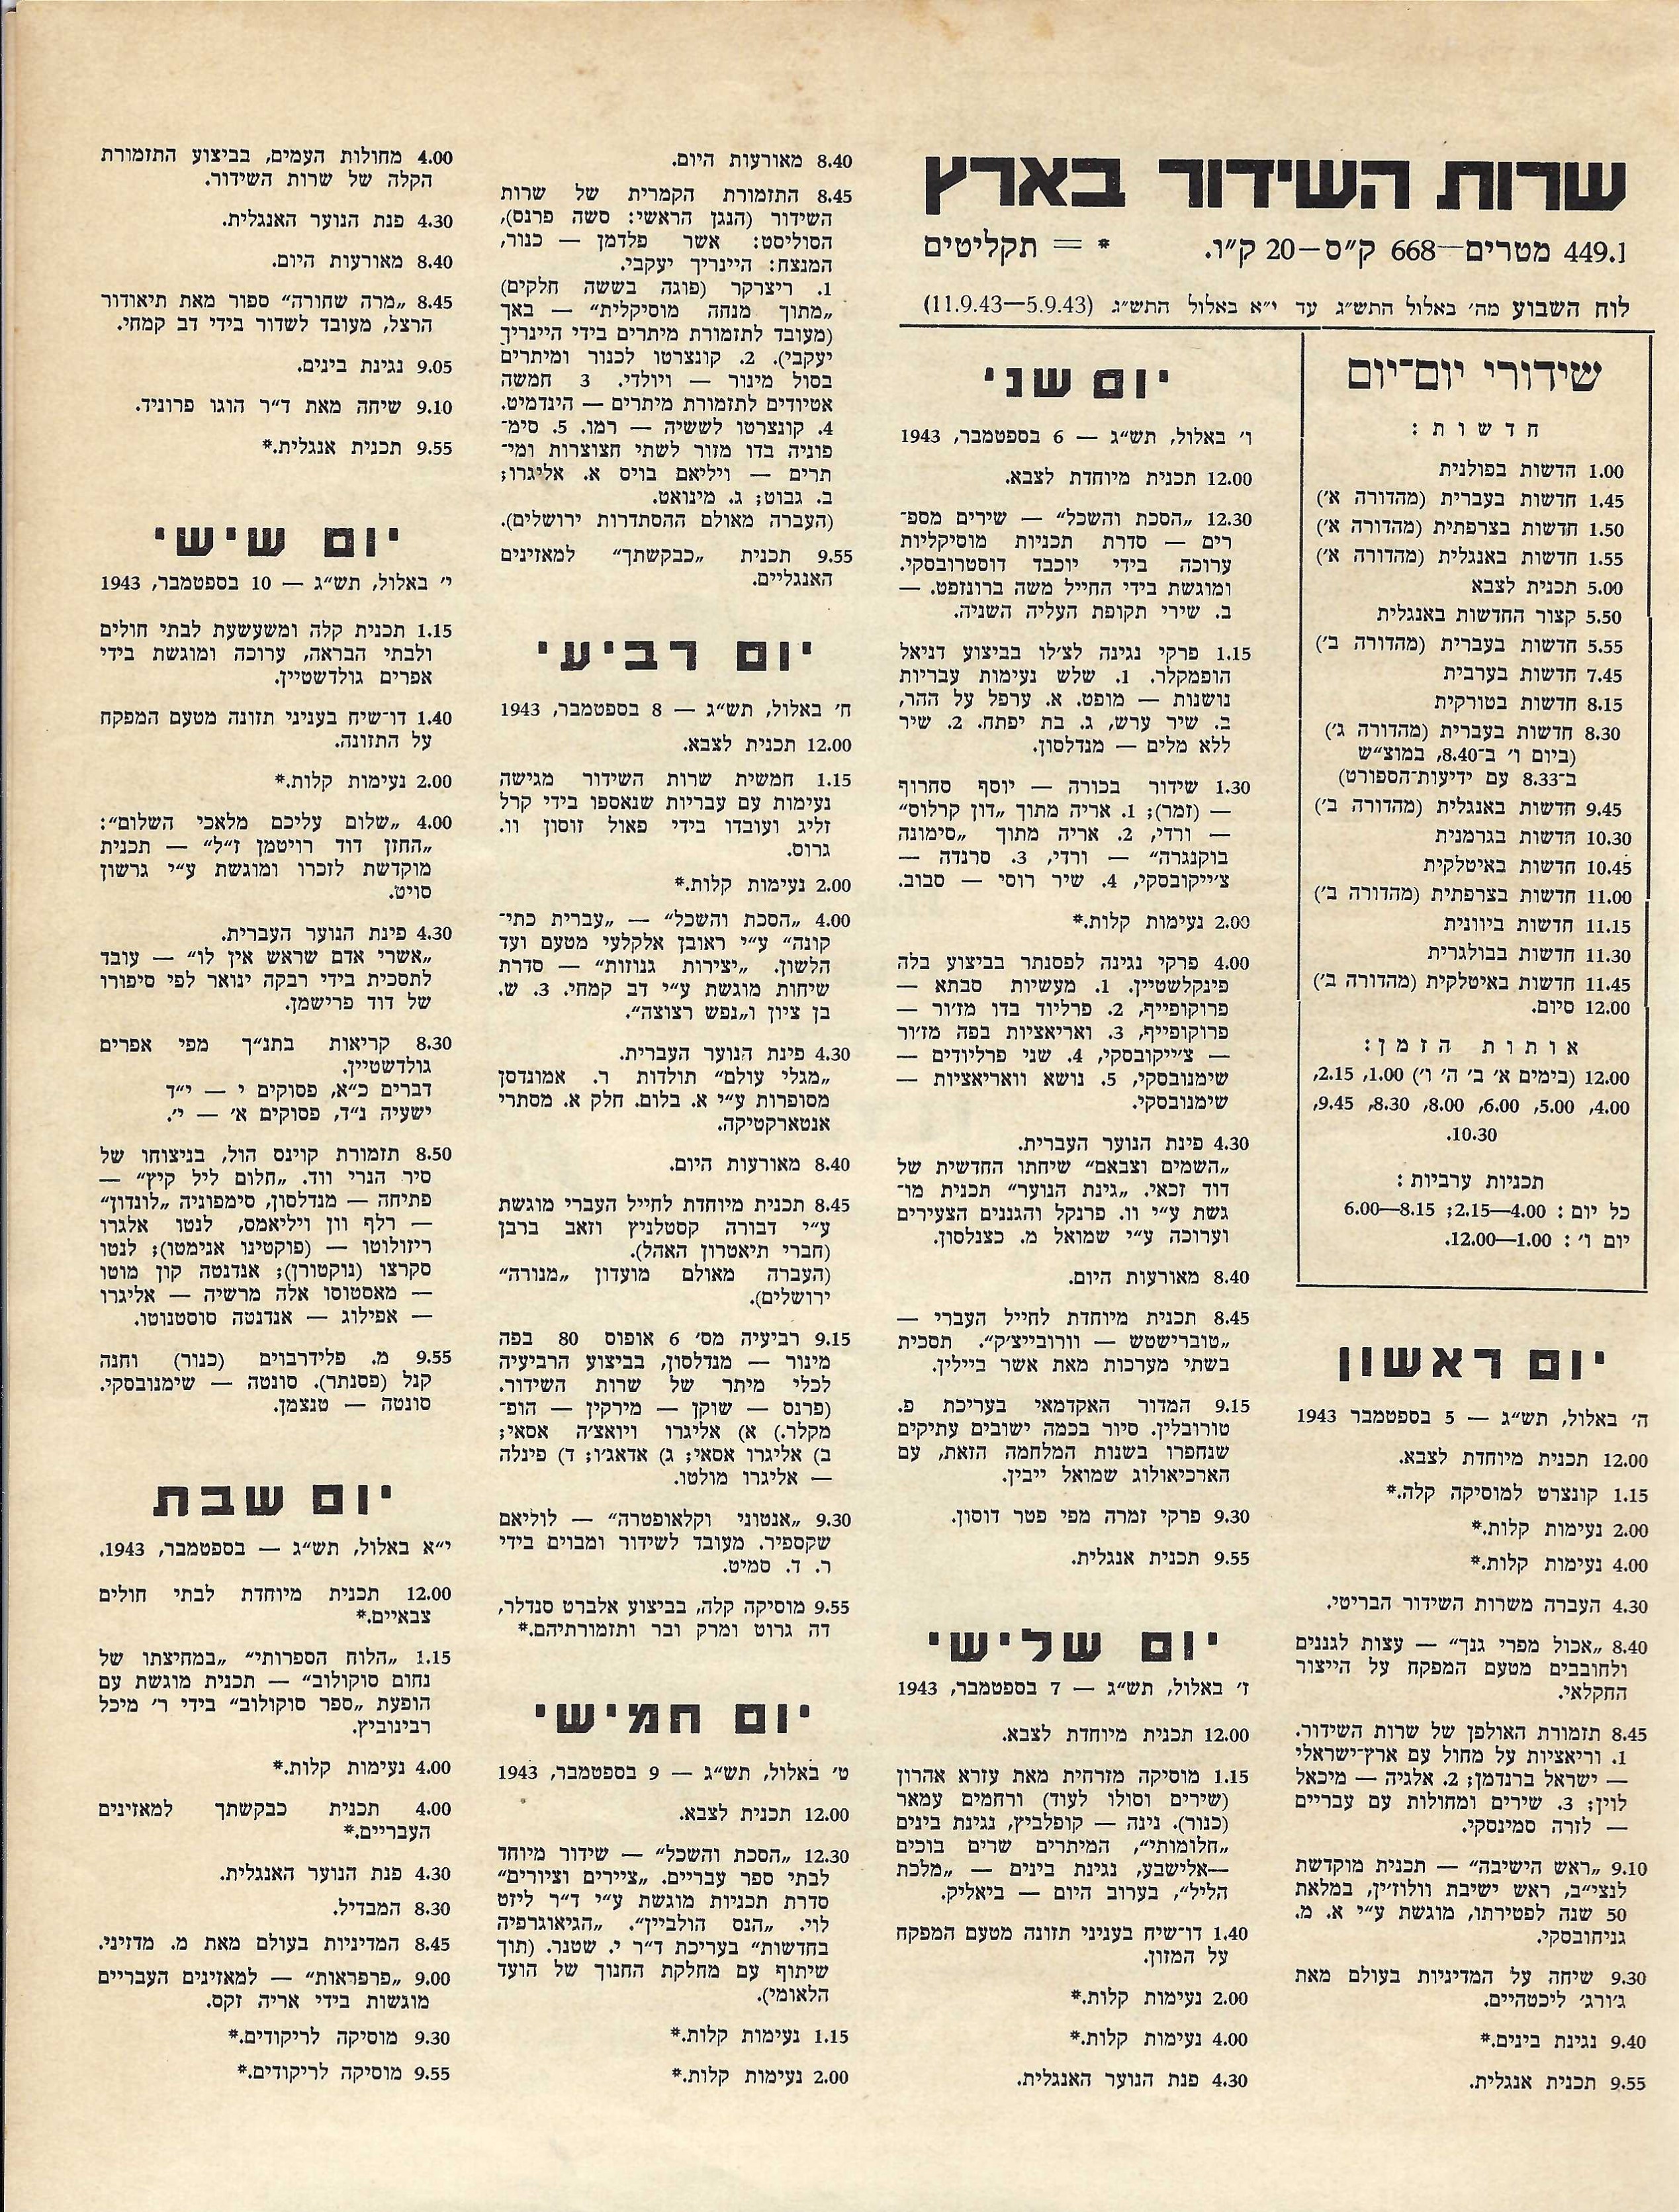 Radio Schedule: September 5, 1943- September 11, 1943